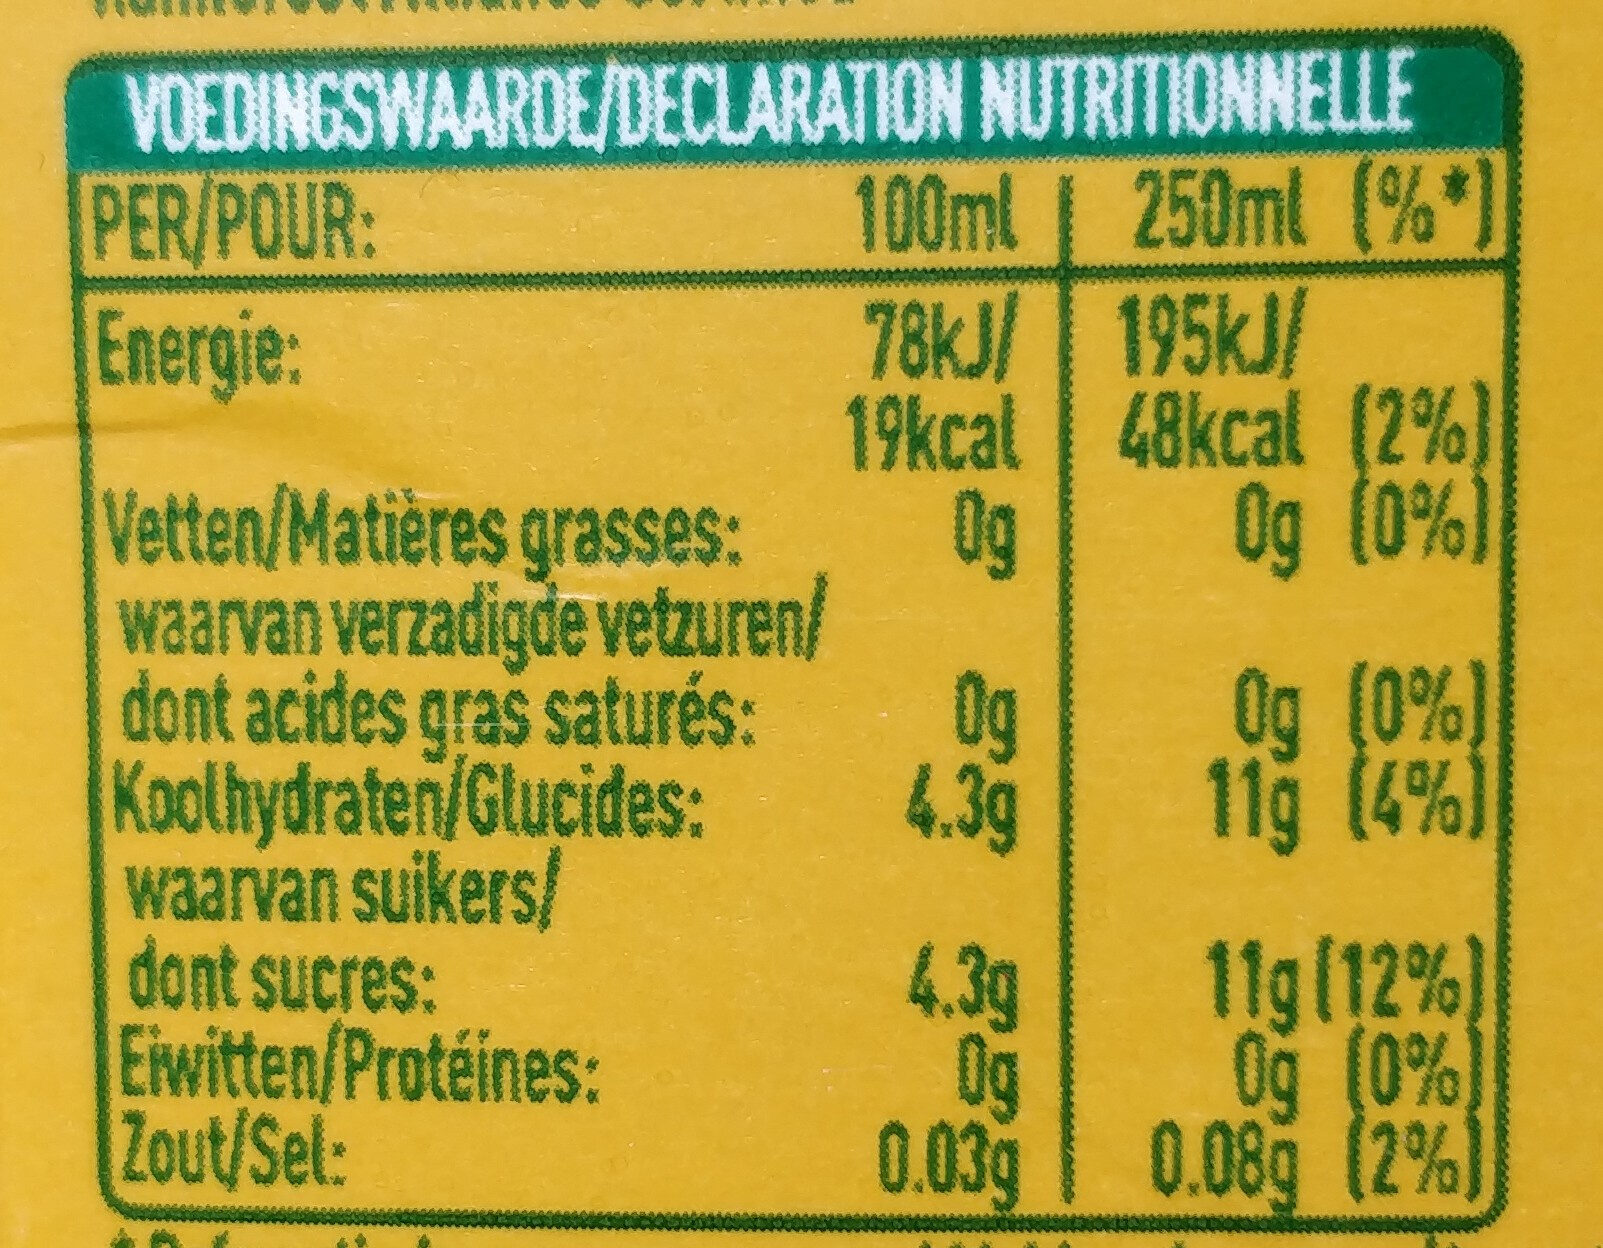 Fuze tea green tea mango chamomile - Tableau nutritionnel - nl